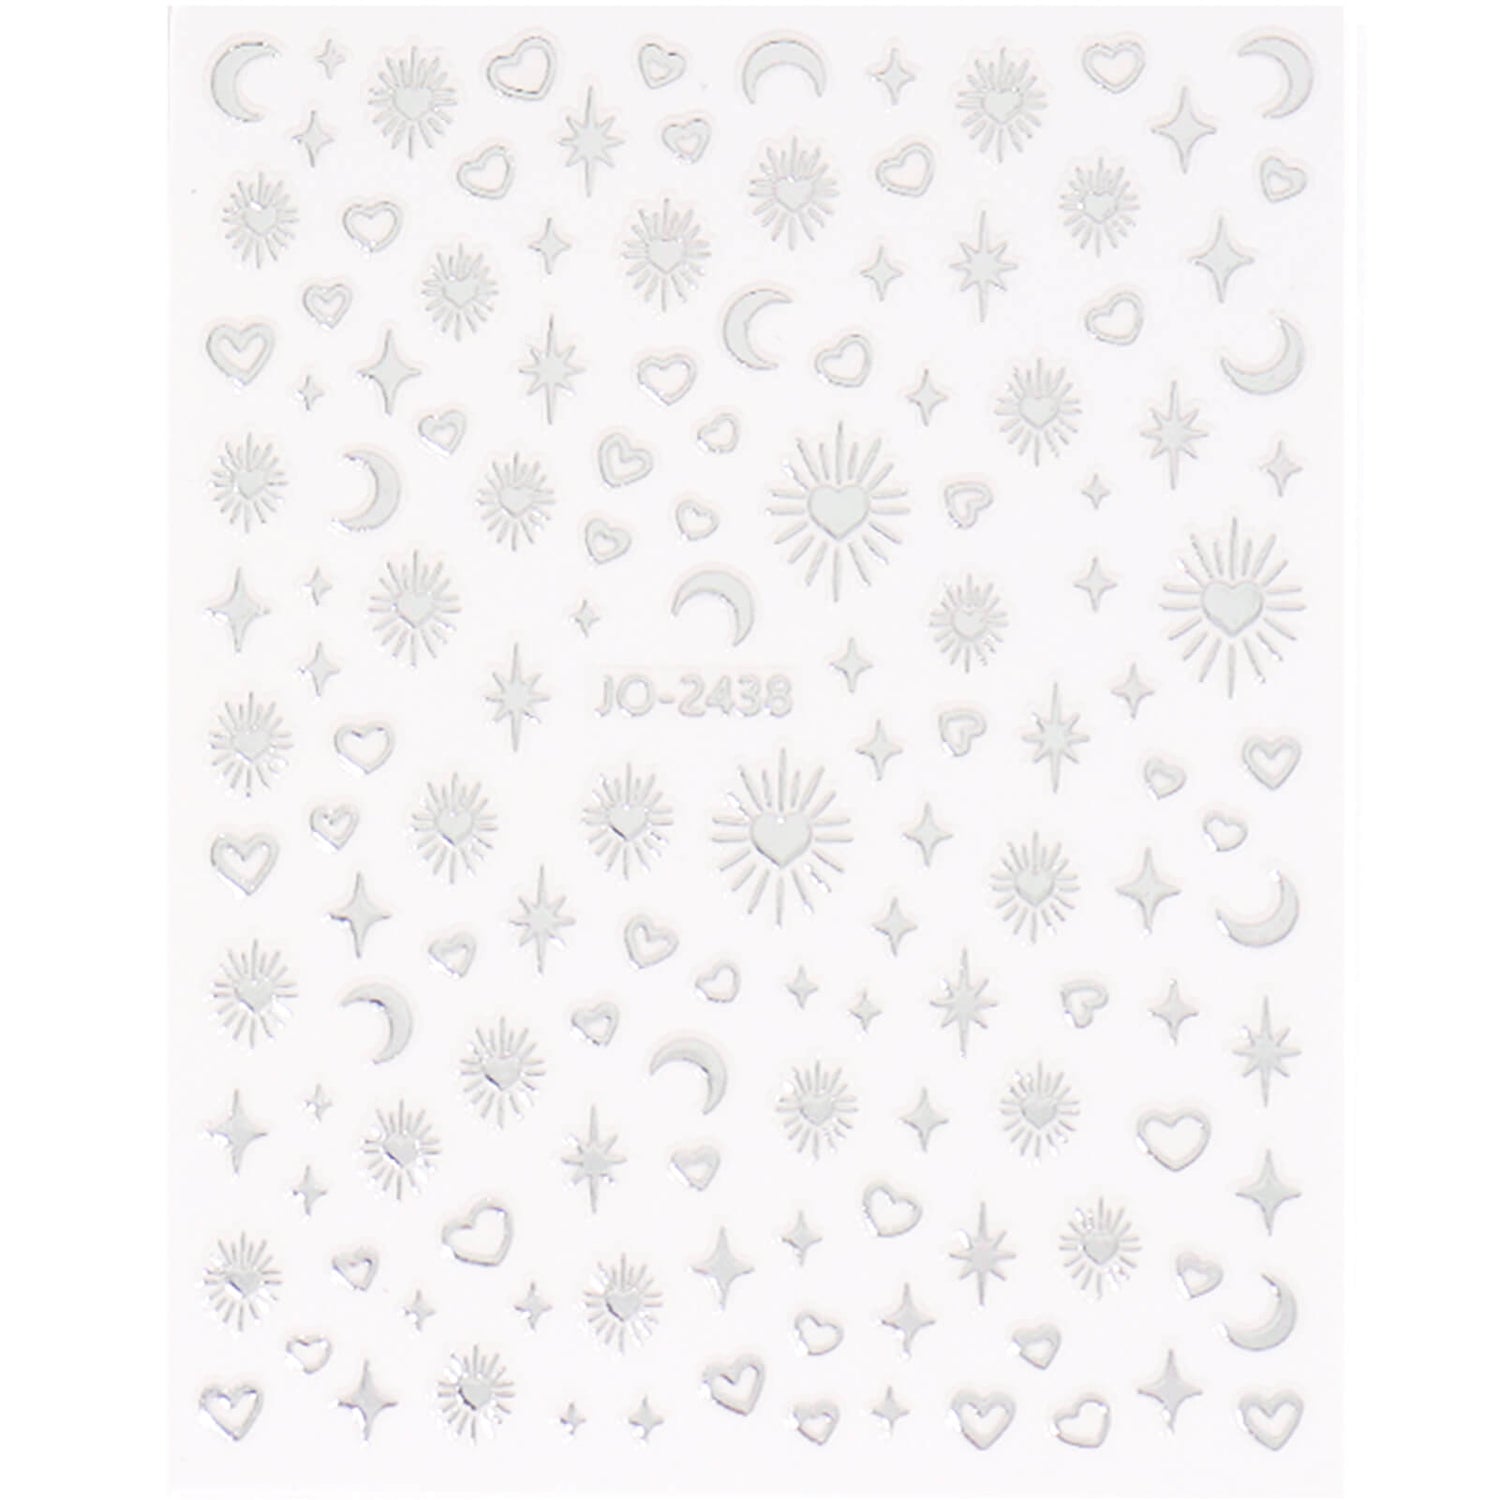 nail-art-stickers-bohemia-moon-star-2438-silver